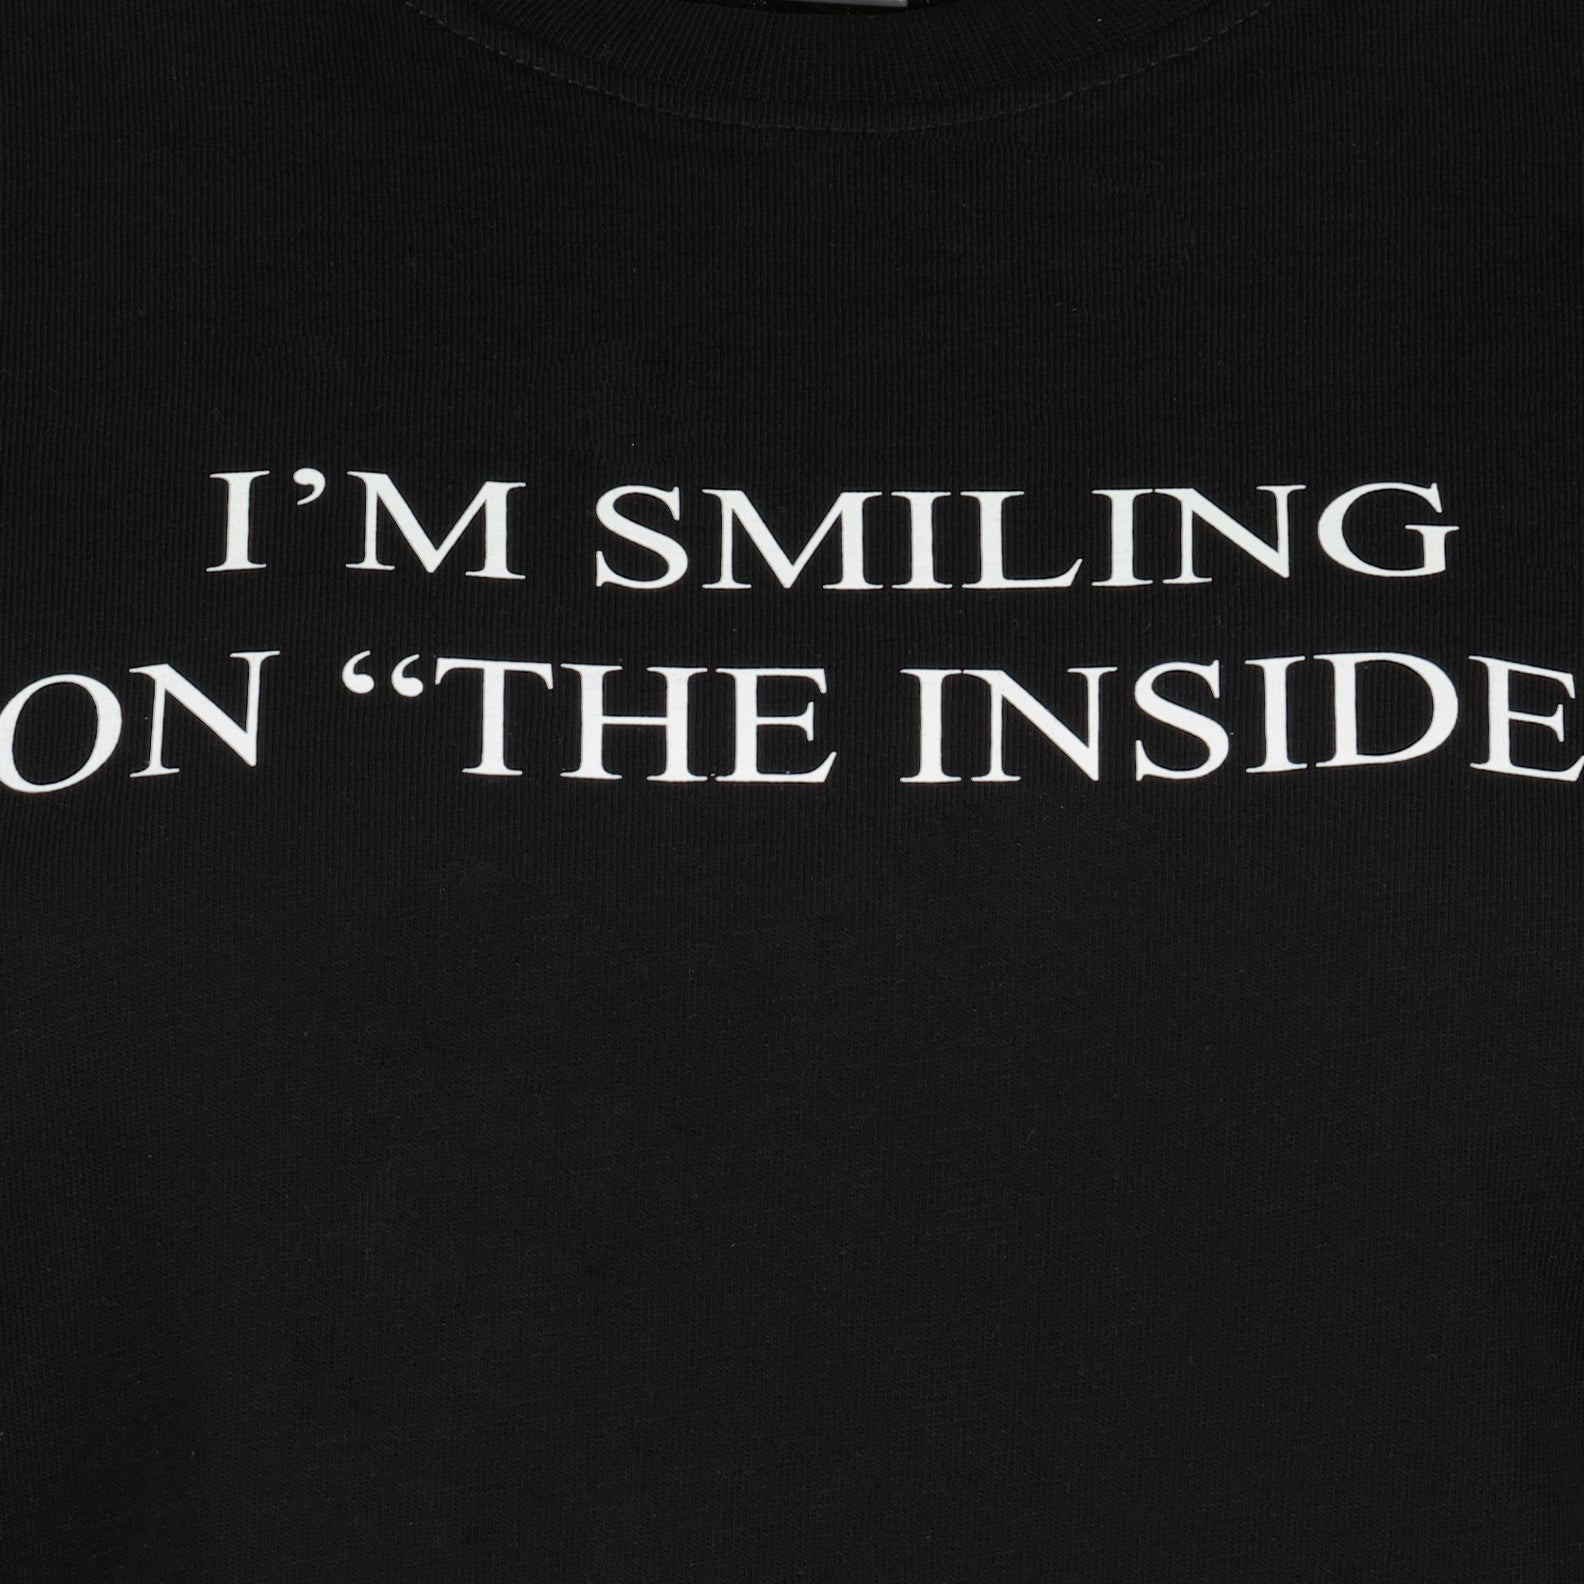 “I’m smiling on the inside” T-shirt